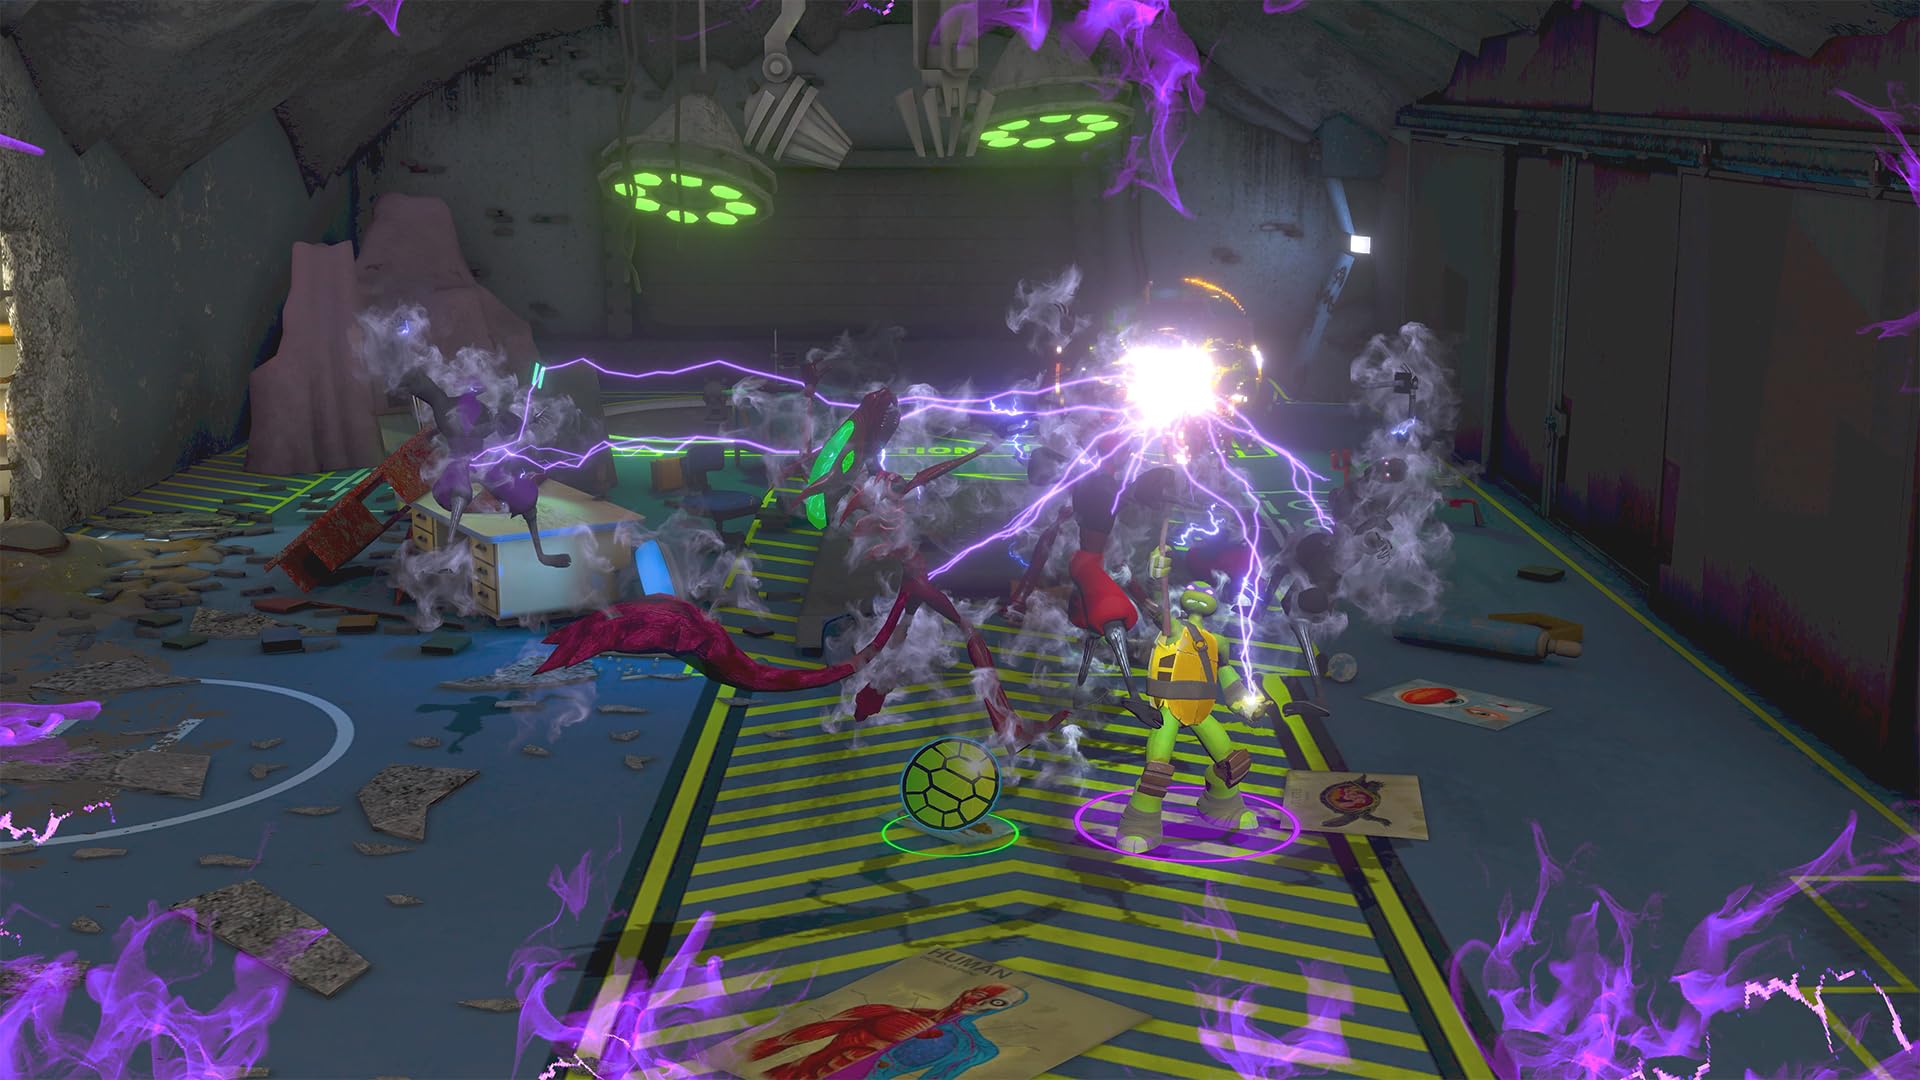 Teenage Mutant Ninja Turtles Arcade: Wrath of the Mutants - (XSX) Xbox Series X Video Games Game Mill   